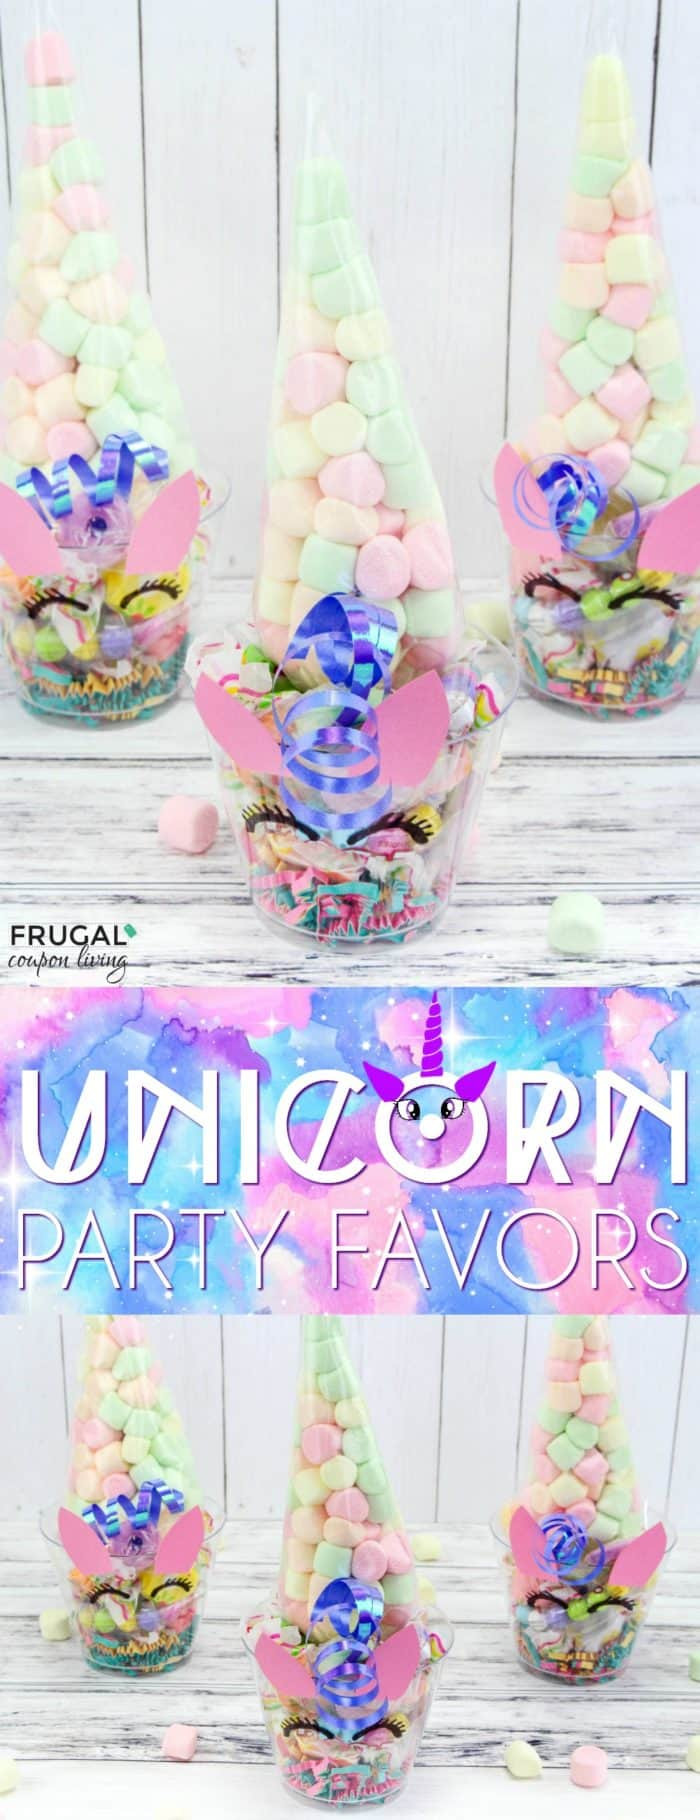 Unicorn Party Favor Ideas
 Unicorn Party Favors and Unicorn Birthday Party Ideas